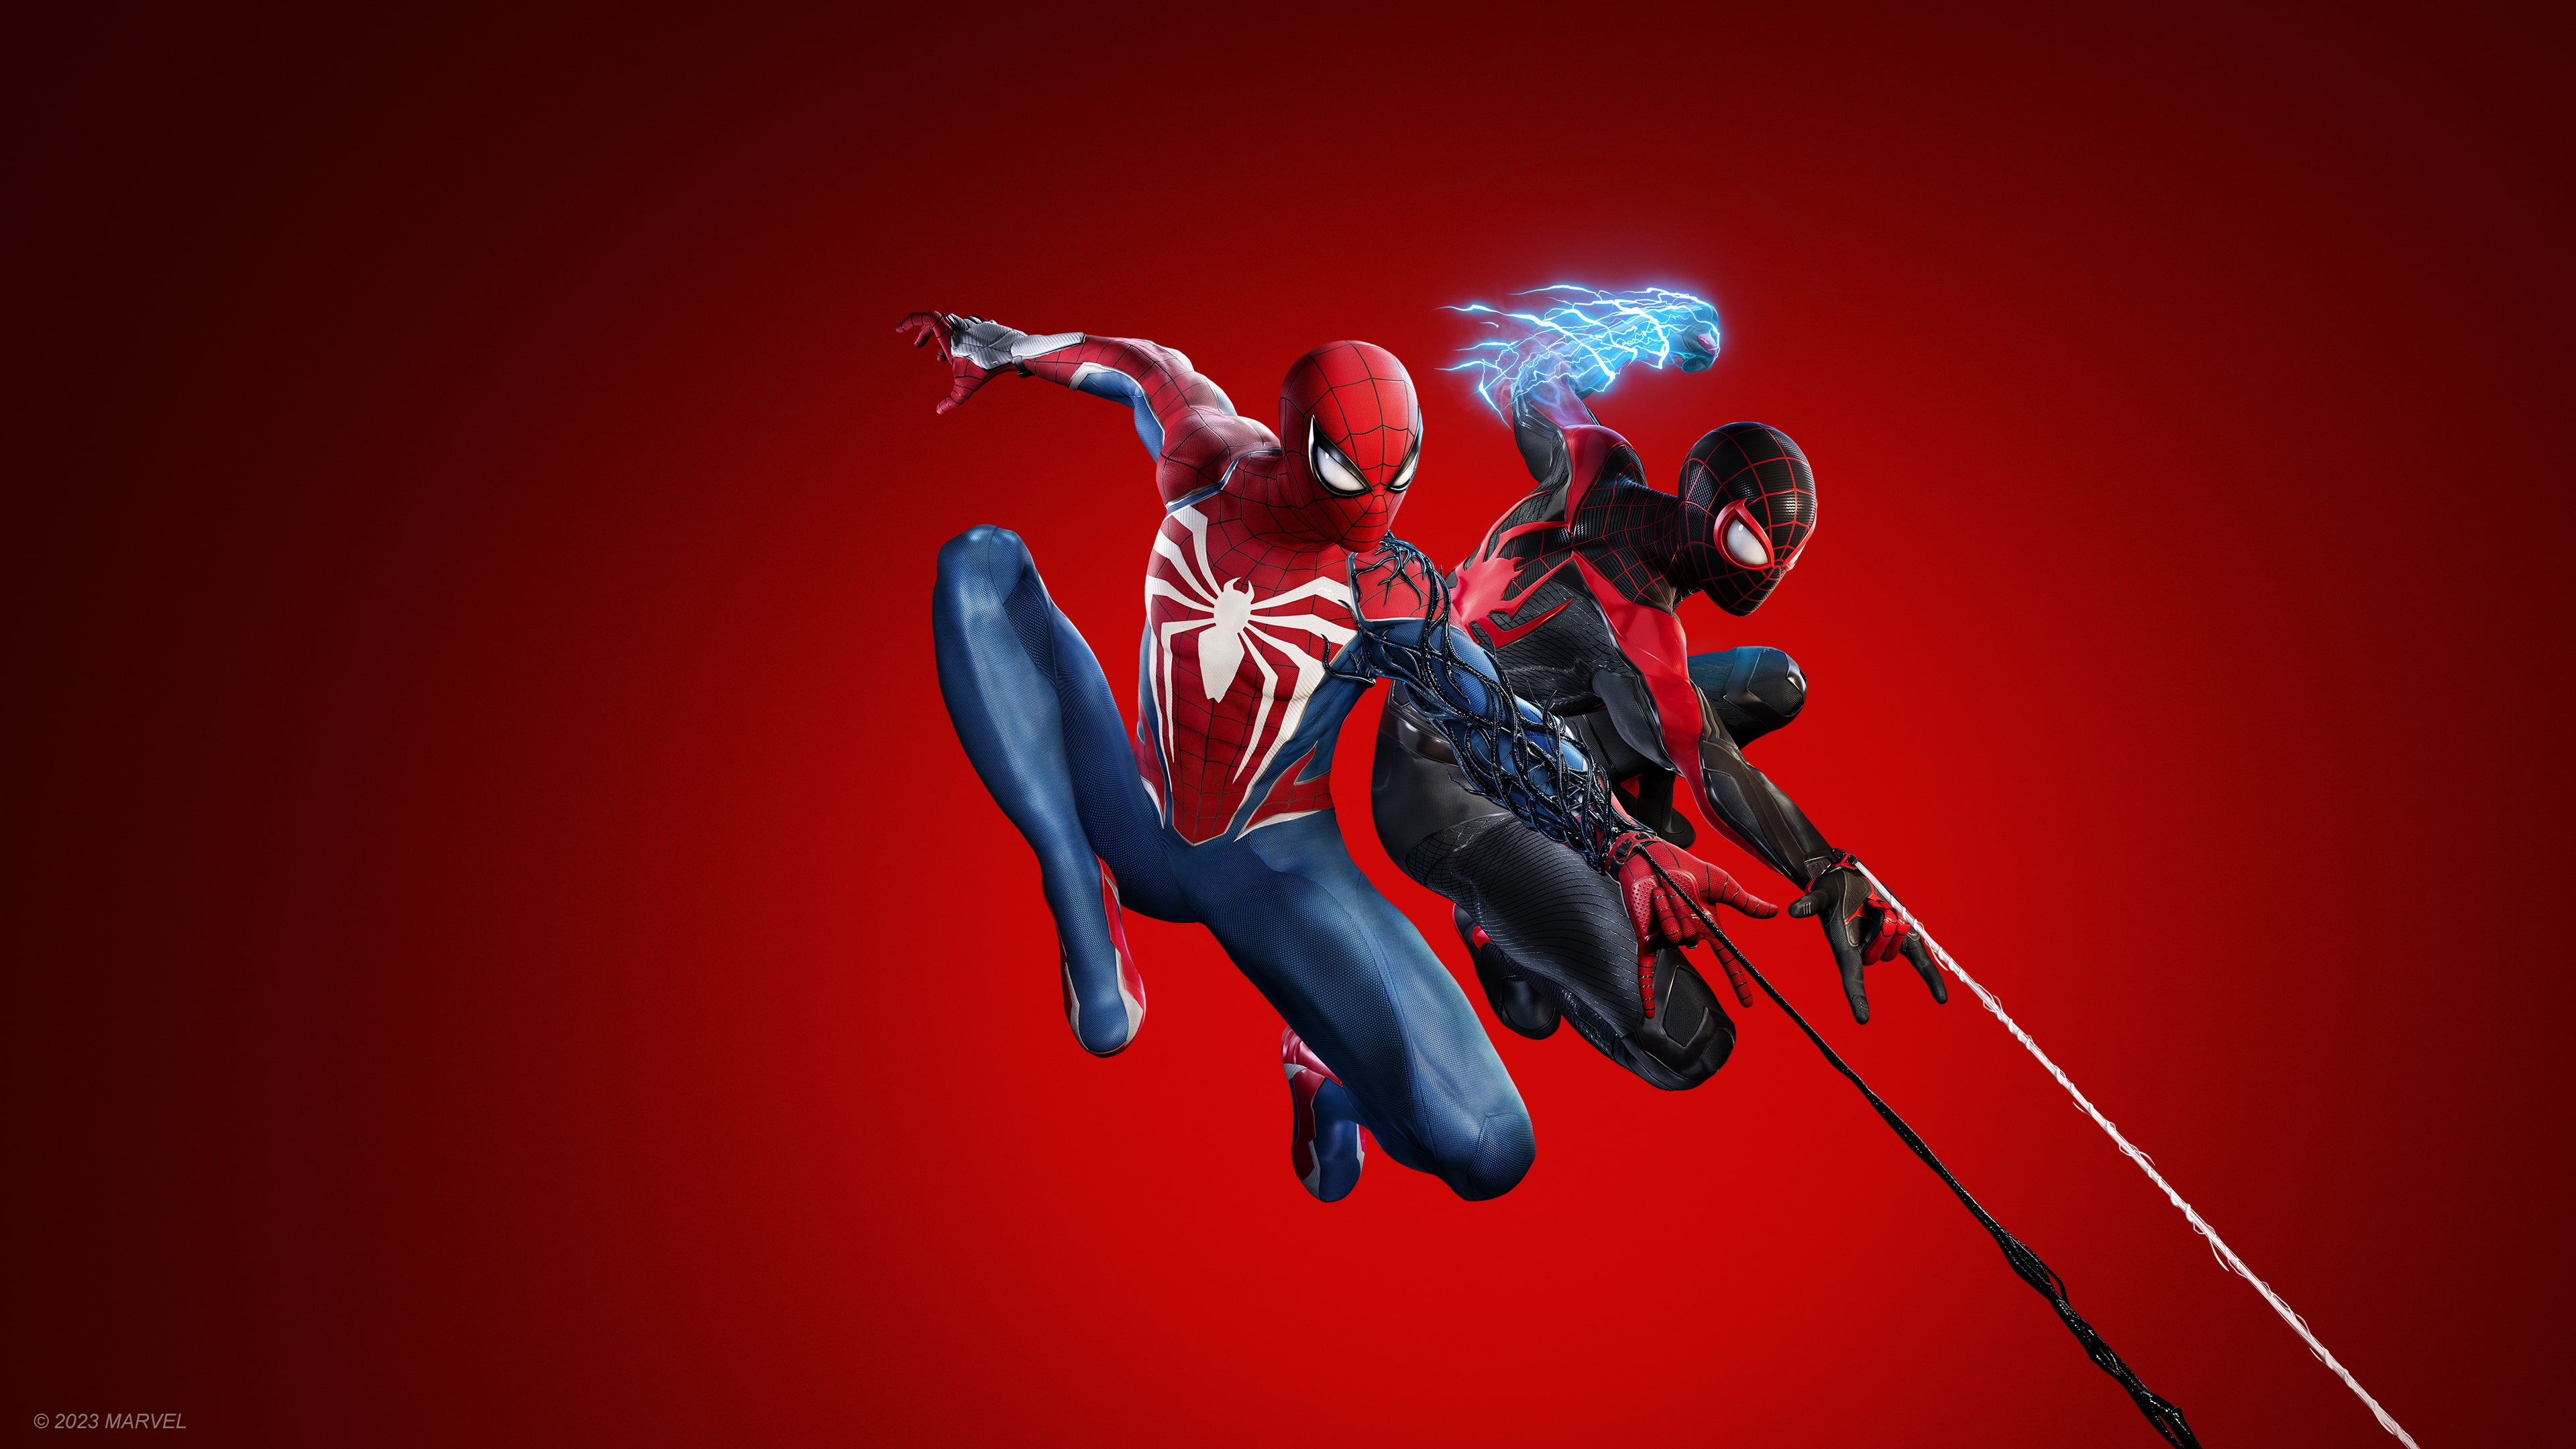 Marvel Spider-Man 2 Homem Aranha 2 PS5 Digital Original - XBLADERGAMES